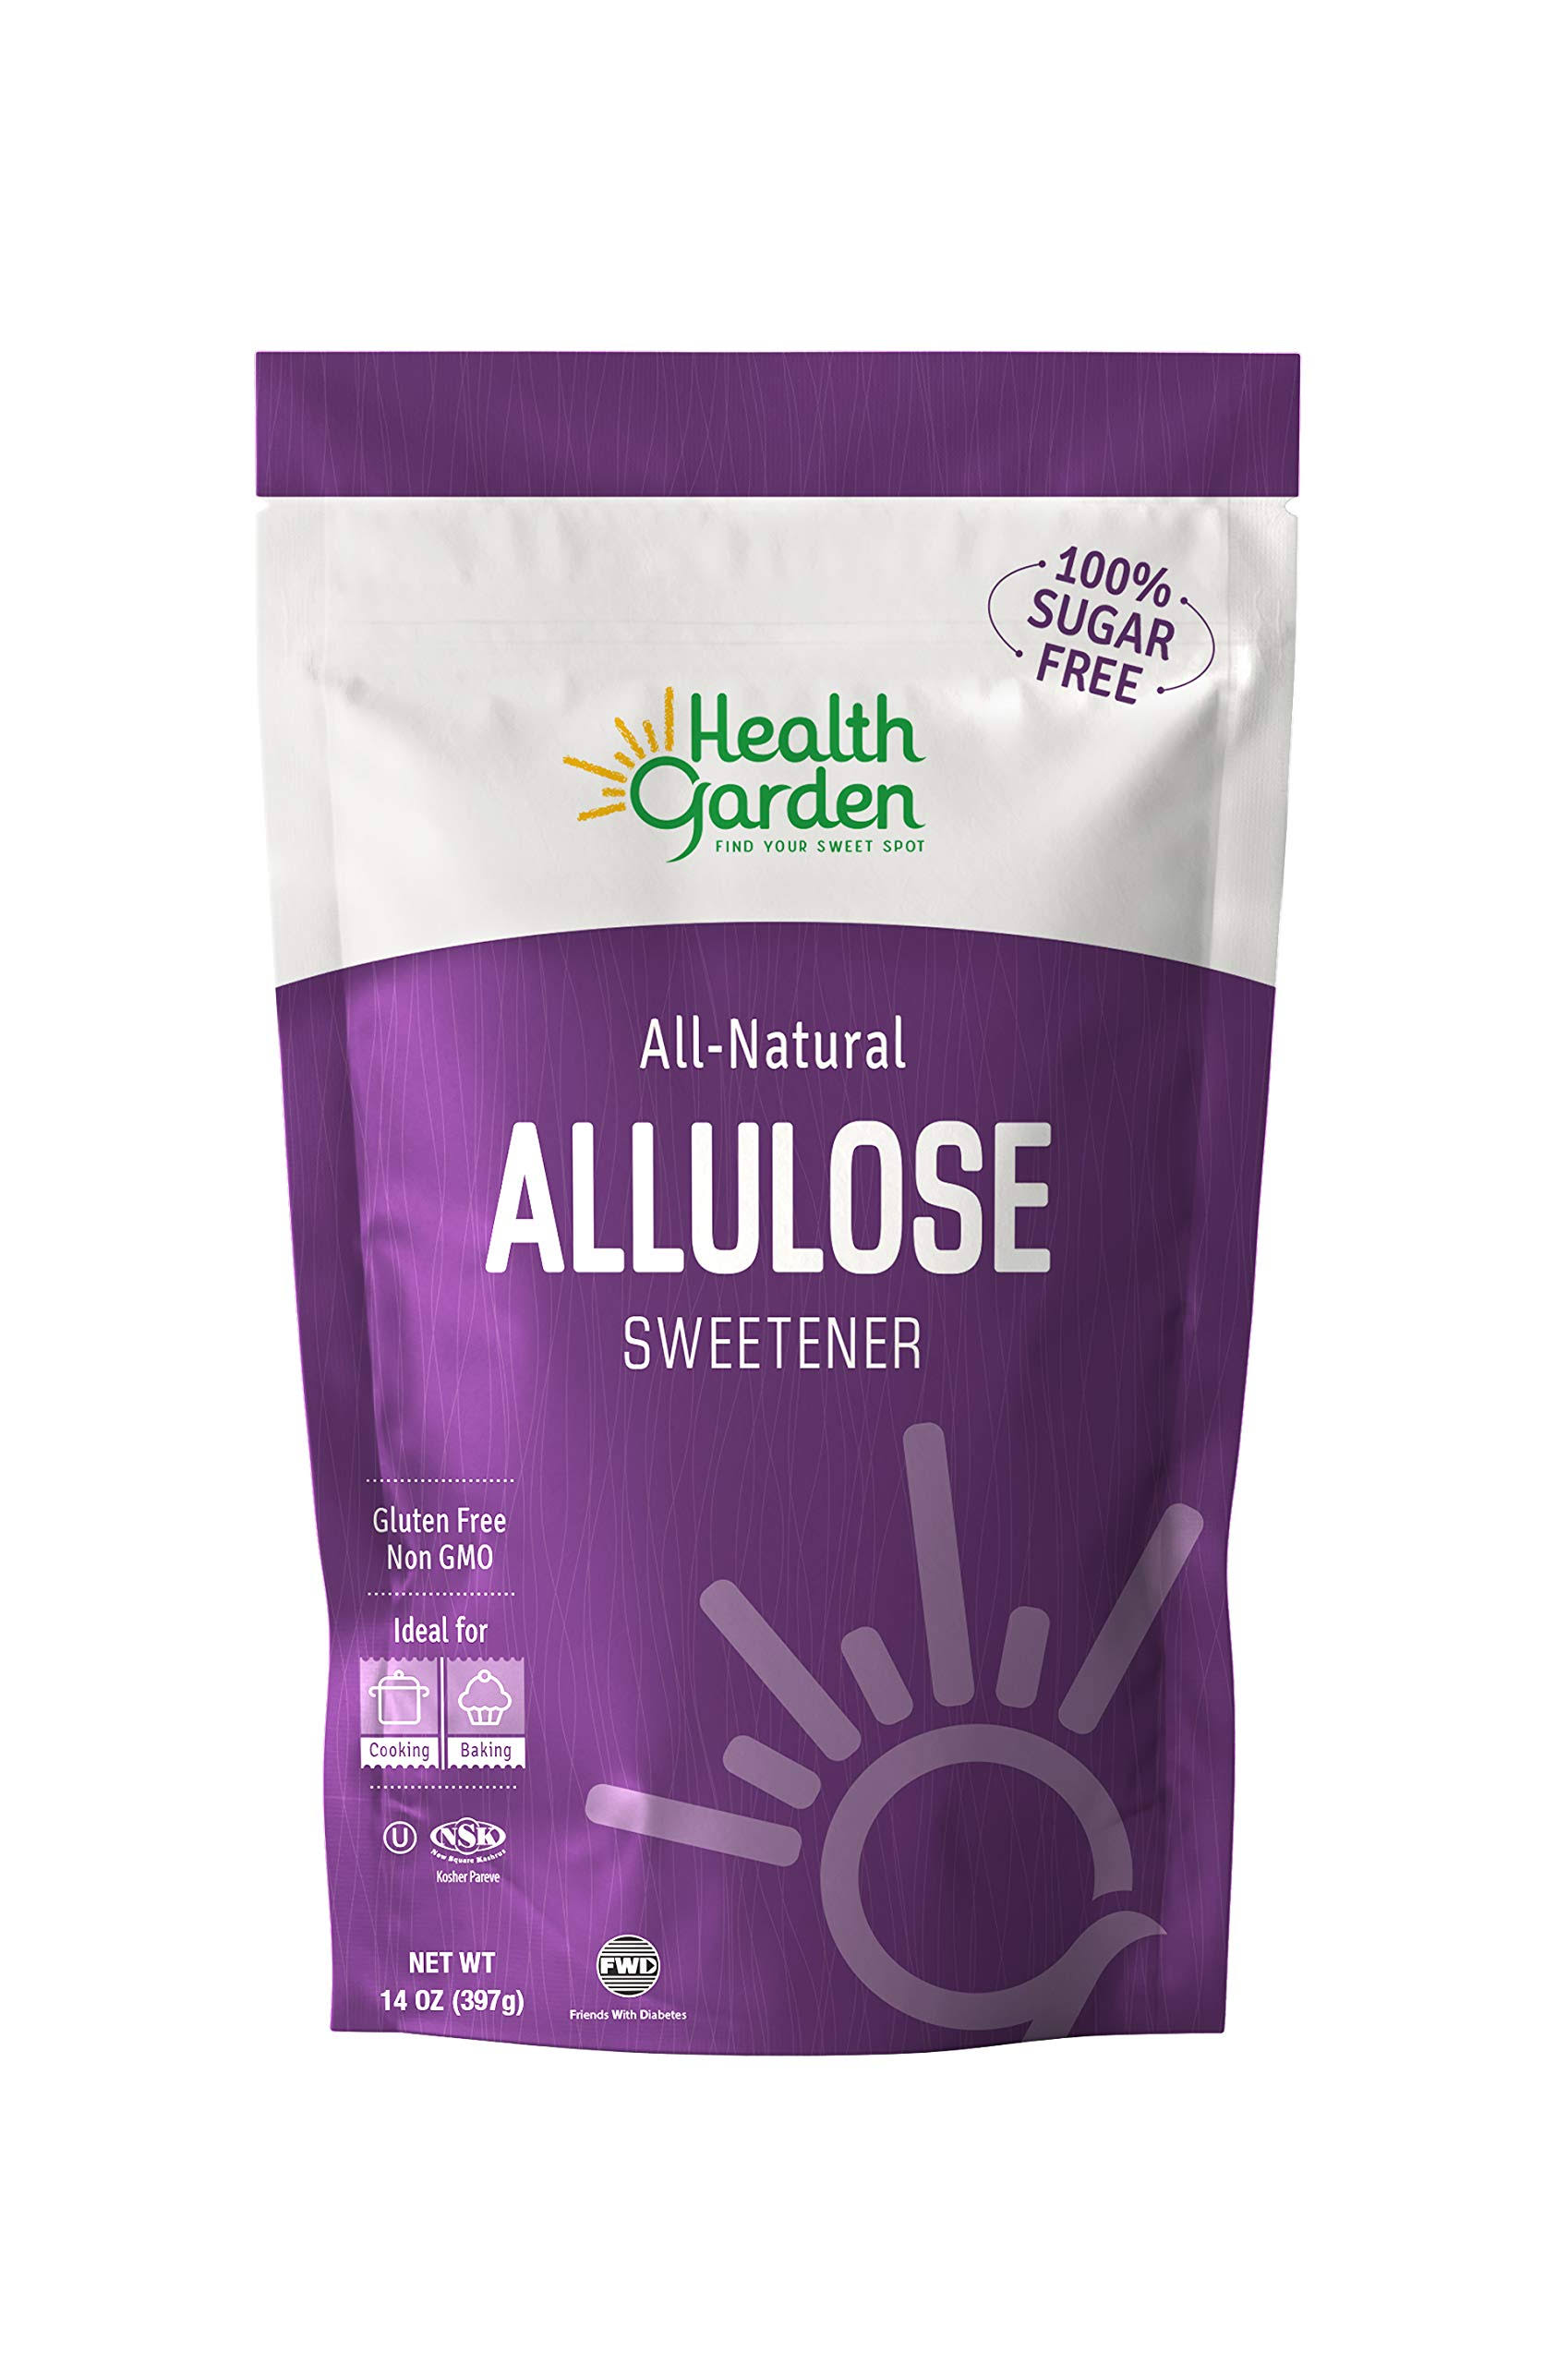 Health Garden Sweetener, Allulose, All-natural - 14 oz